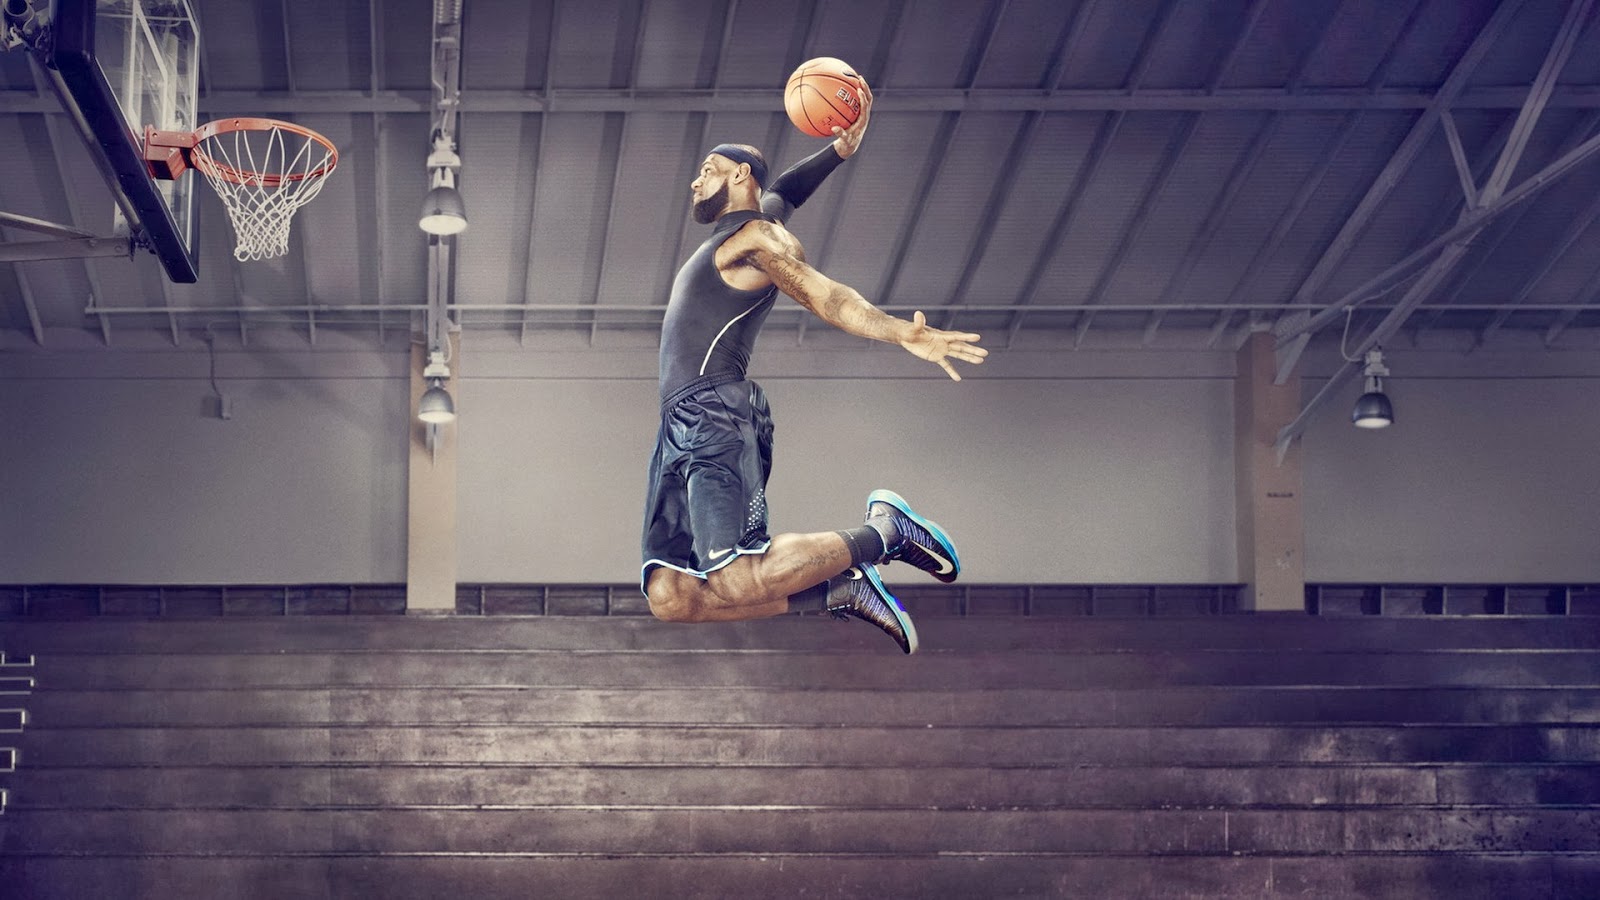 new wallpaper 2014,basketball moves,basketball player,basketball,flip (acrobatic),freestyle football